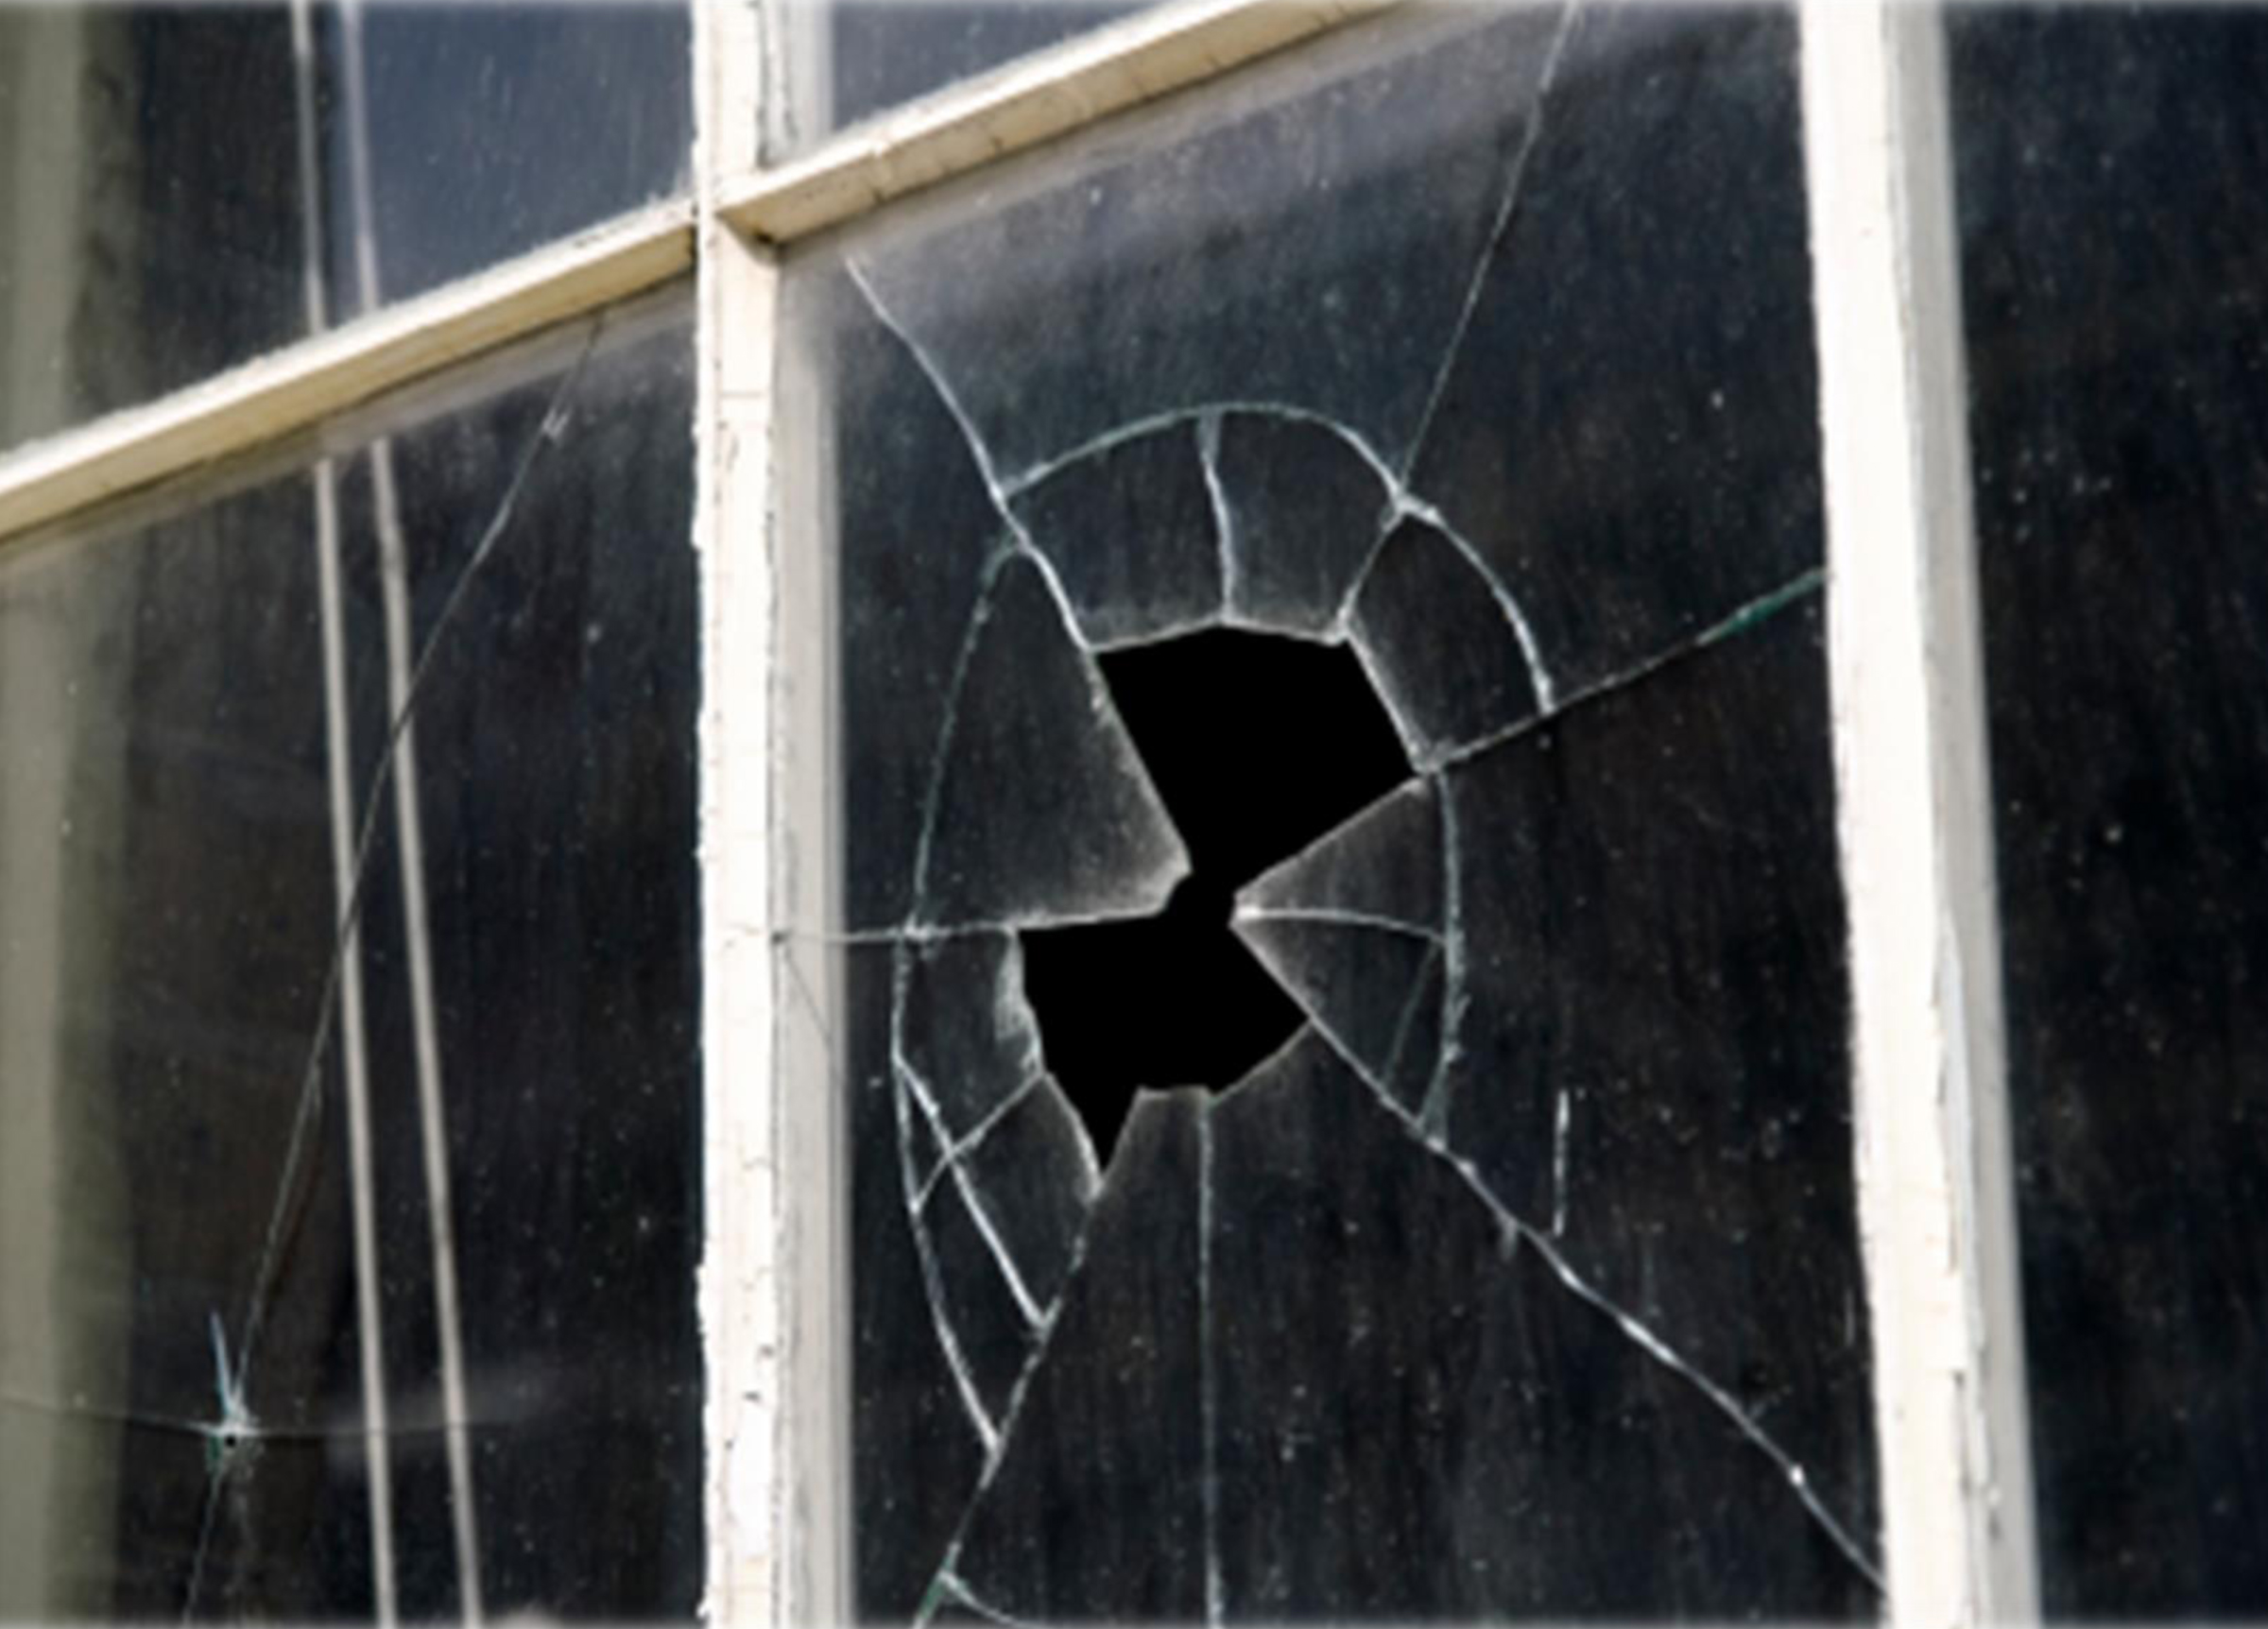 Трещина на окне. Разбитое окно. Разбитое стекло в окне. Трещина на стекле окна.